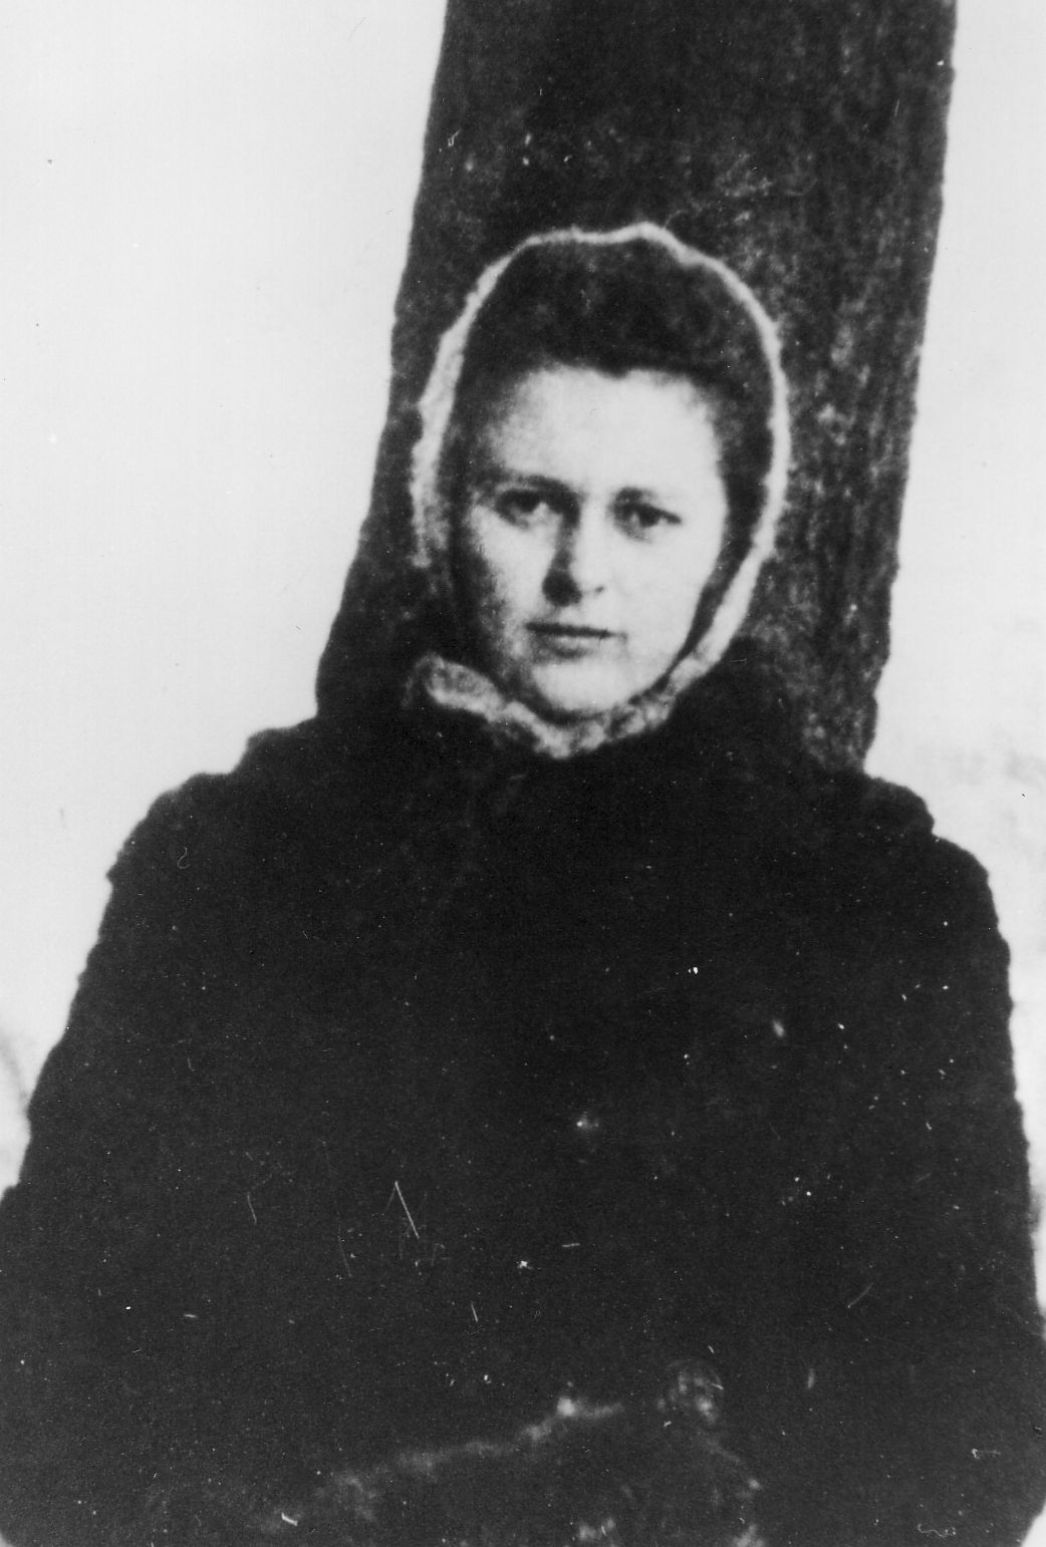 Private photo of Danuta Brzosko-Medryk